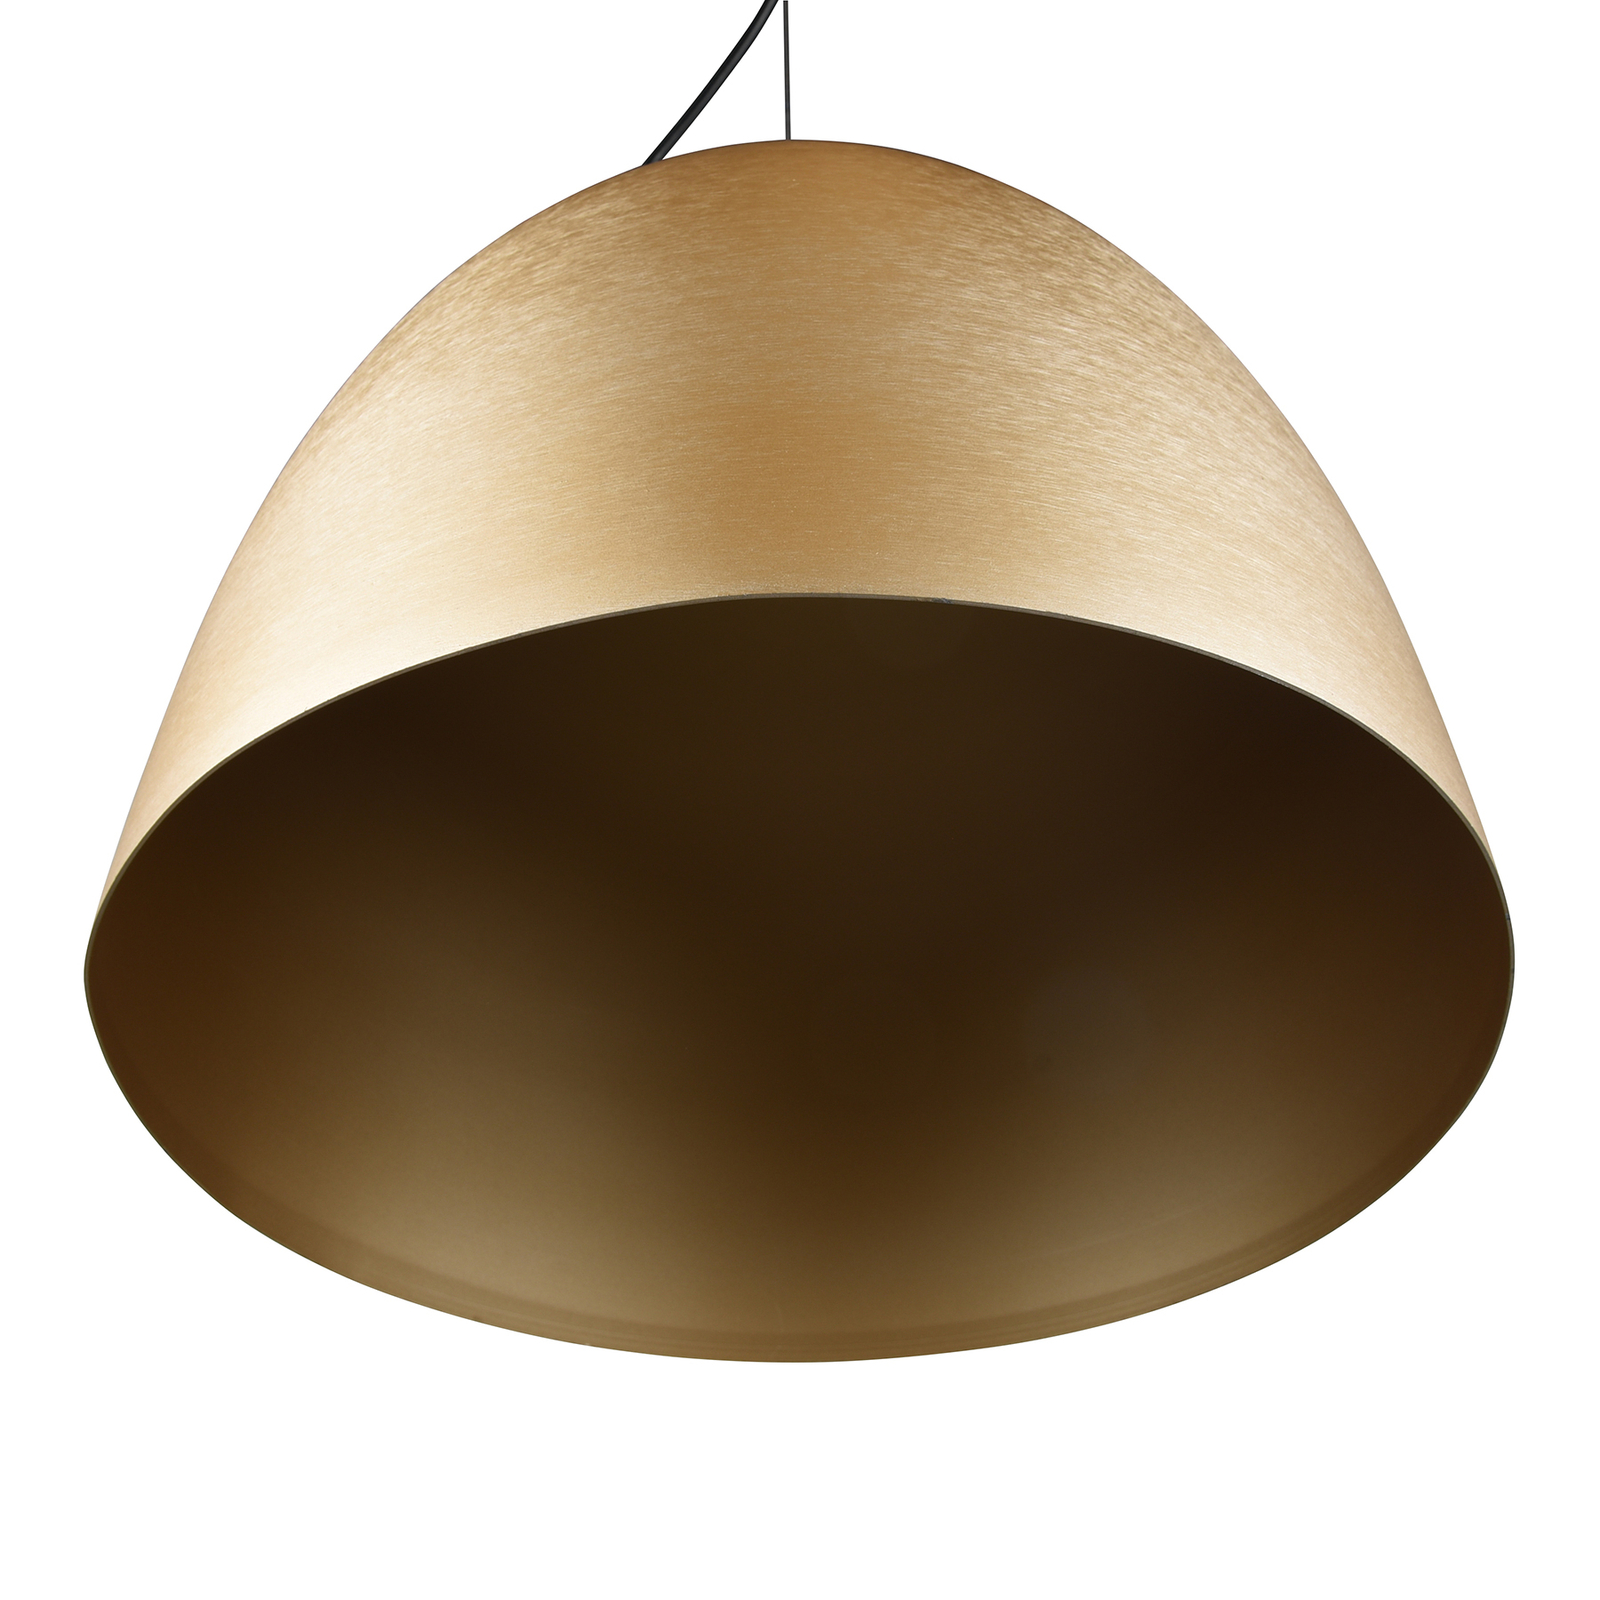 TILDA pendant light, 1-bulb, brass, Ø 40 cm